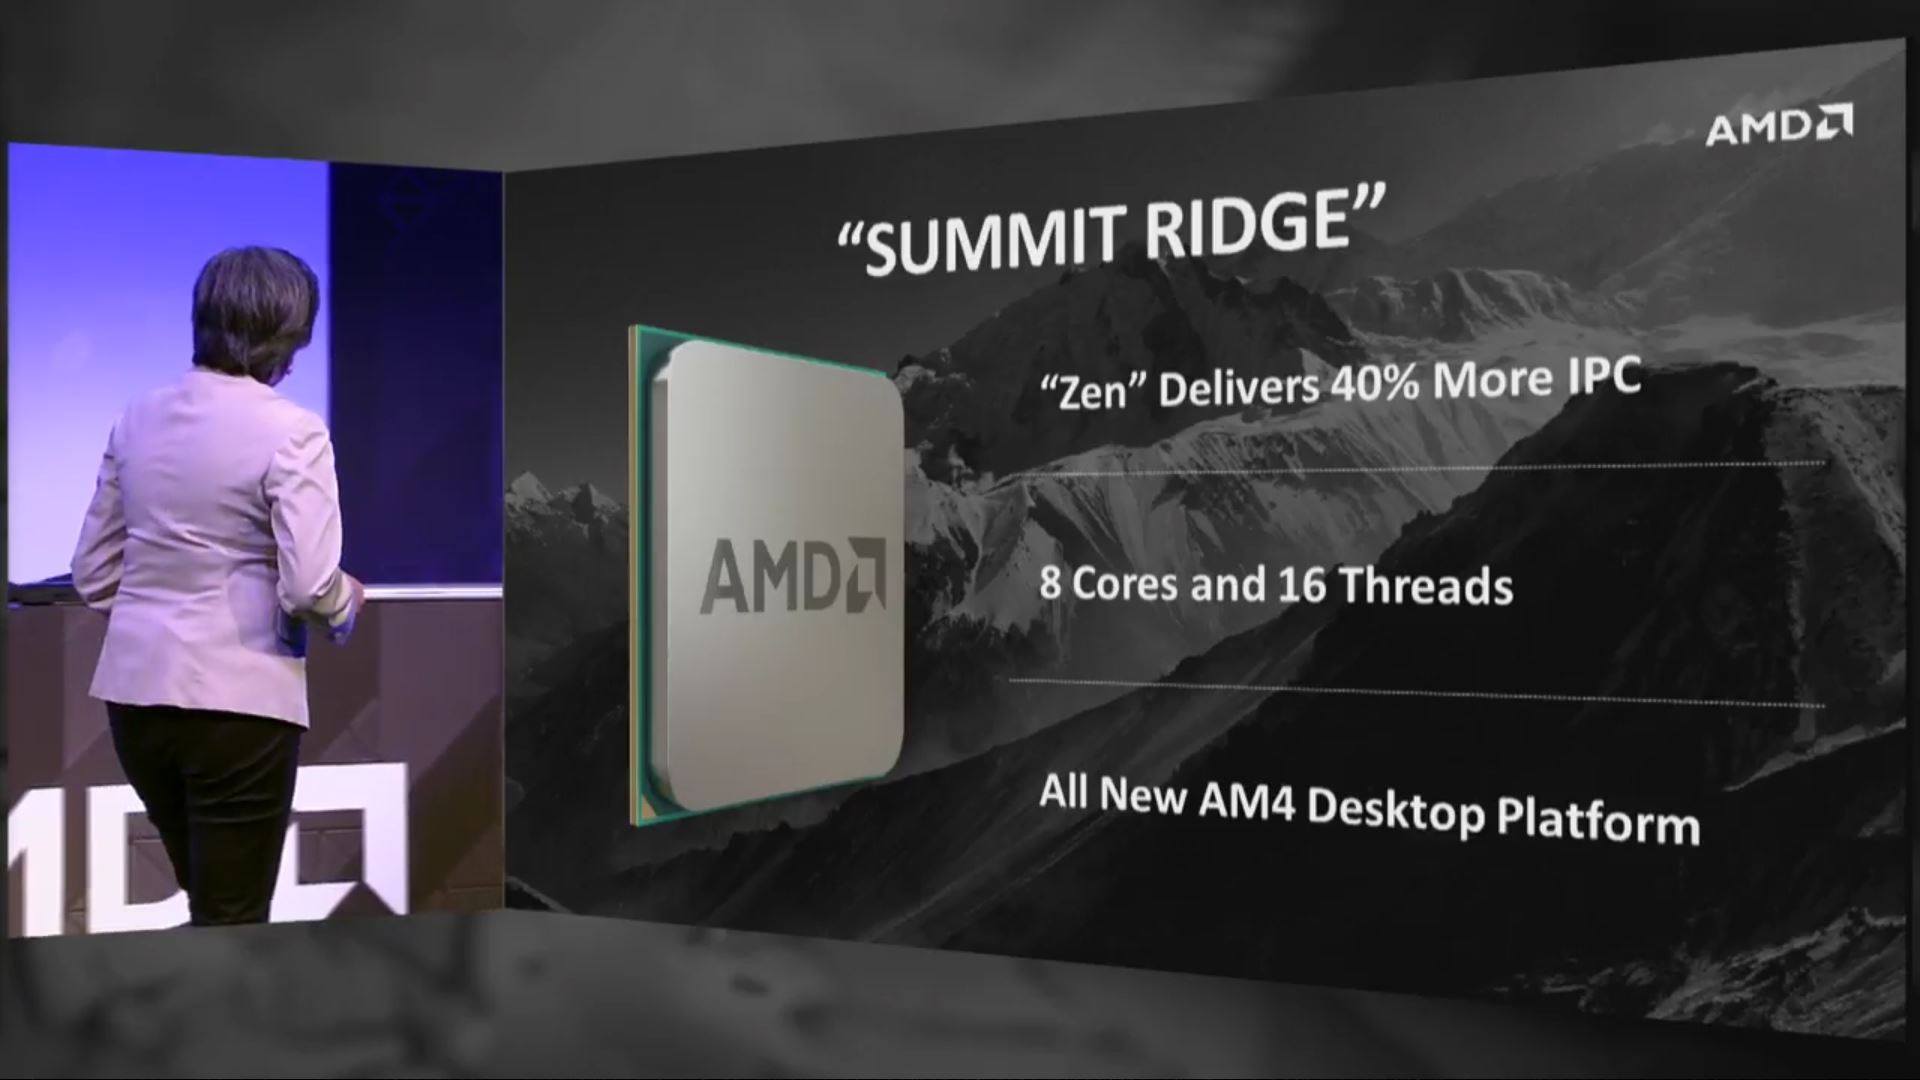 AMD-Zen-Summit-Ridge-Processor_1